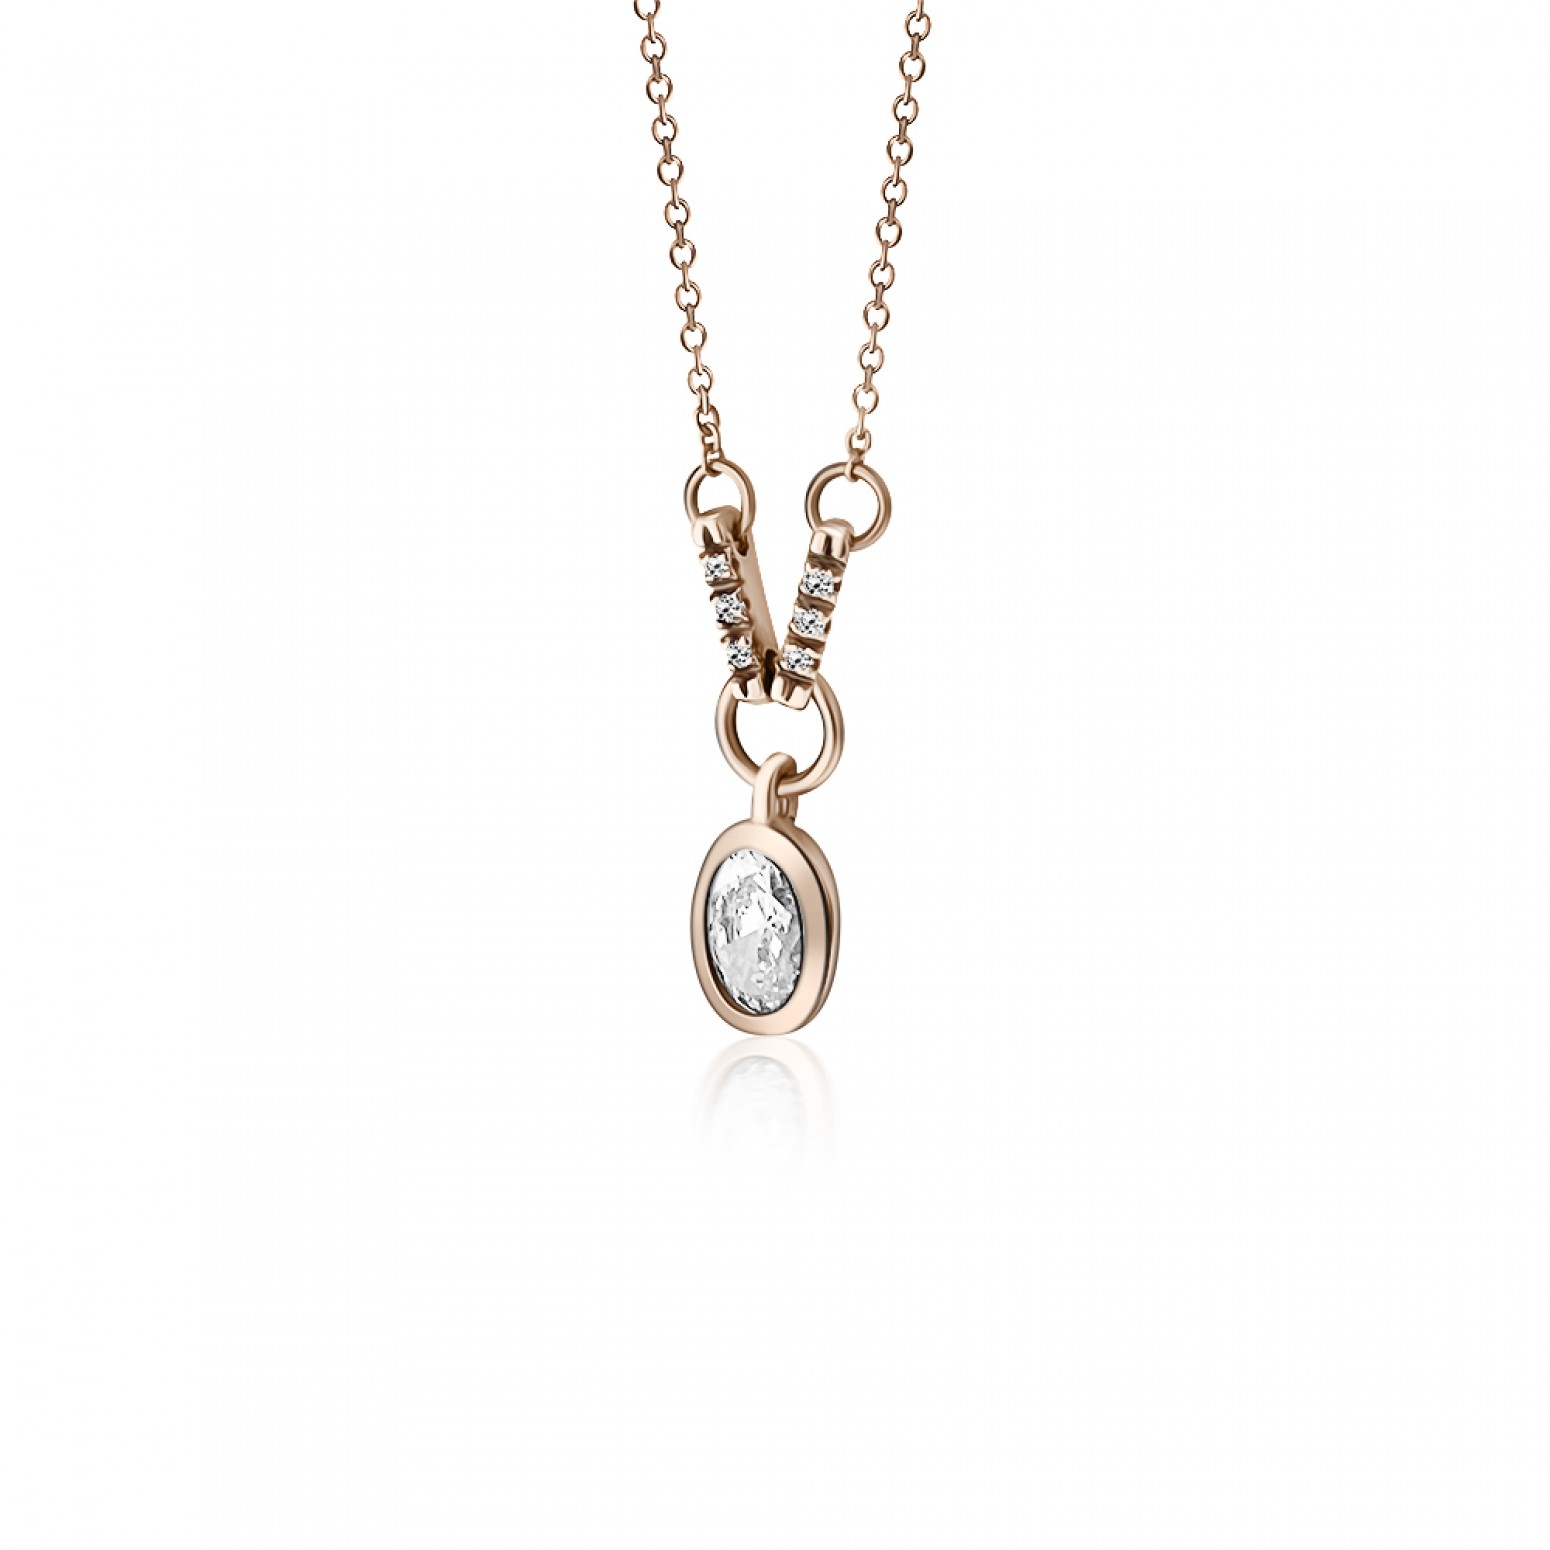 Solitaire necklace, Κ14 pink gold with zircon, ko1491 NECKLACES Κοσμηματα - chrilia.gr